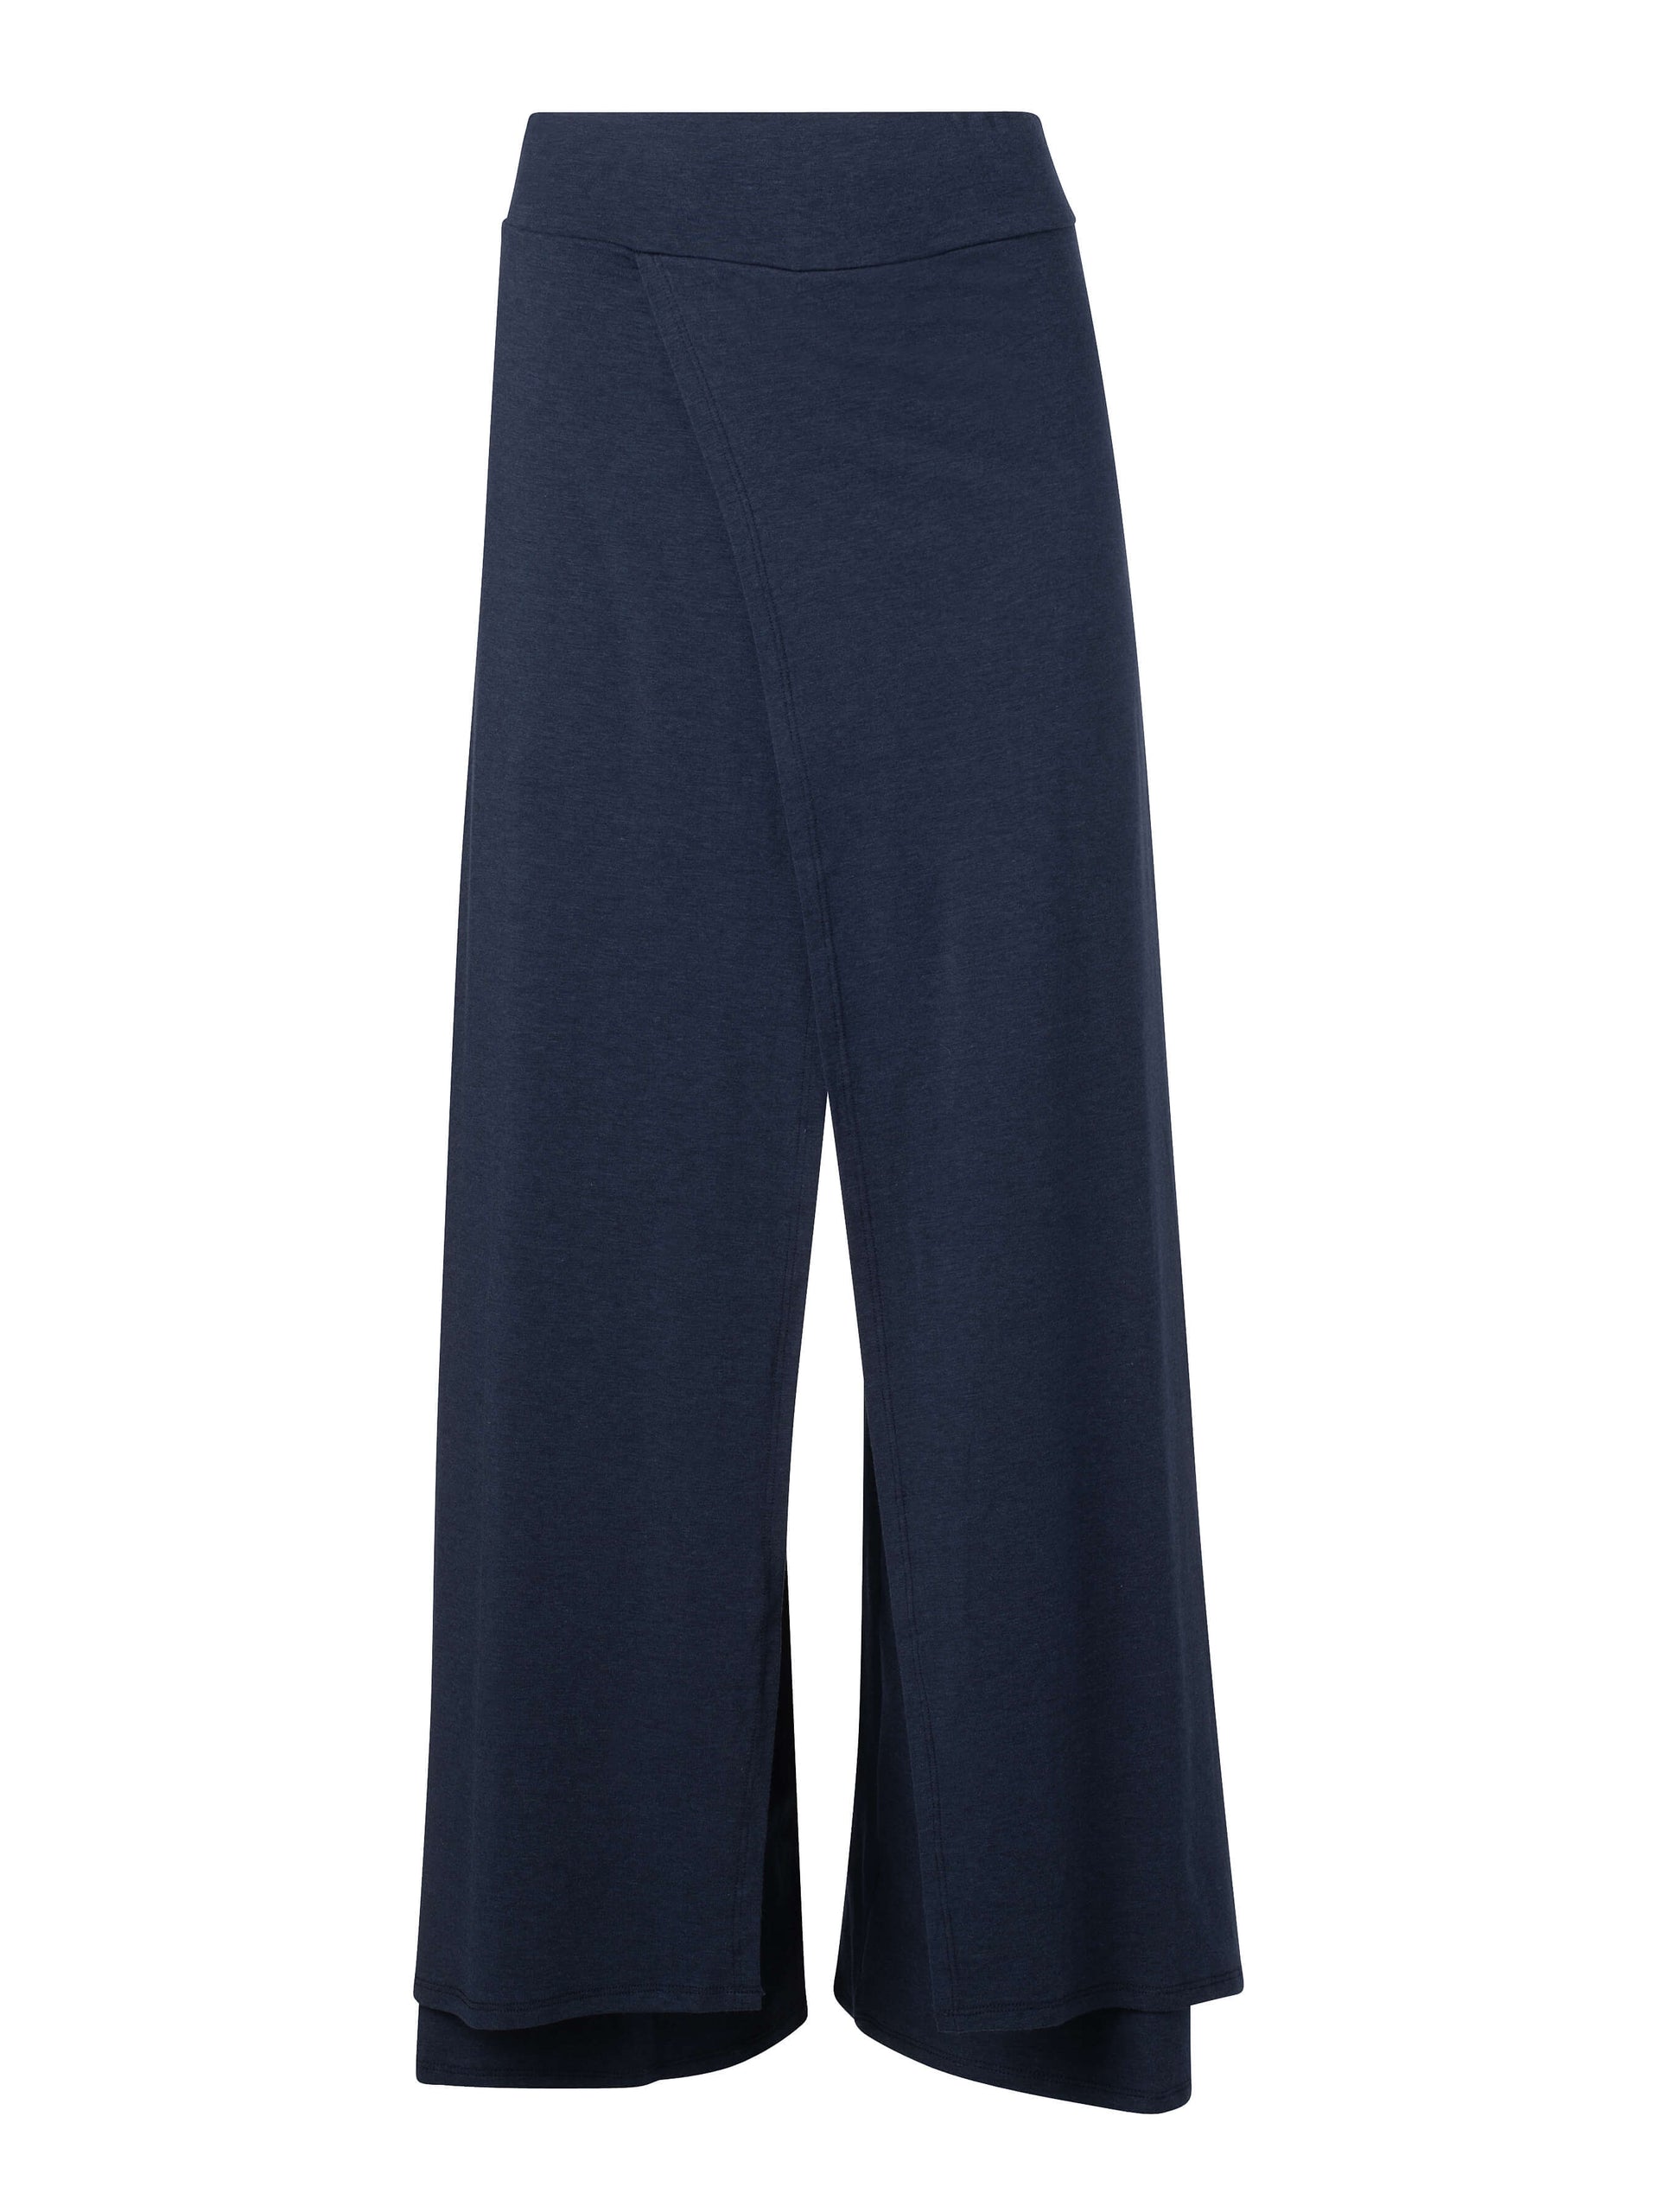 Pantalon-INDIEN-tencel coton bio-marine-femme-ghost-E413C